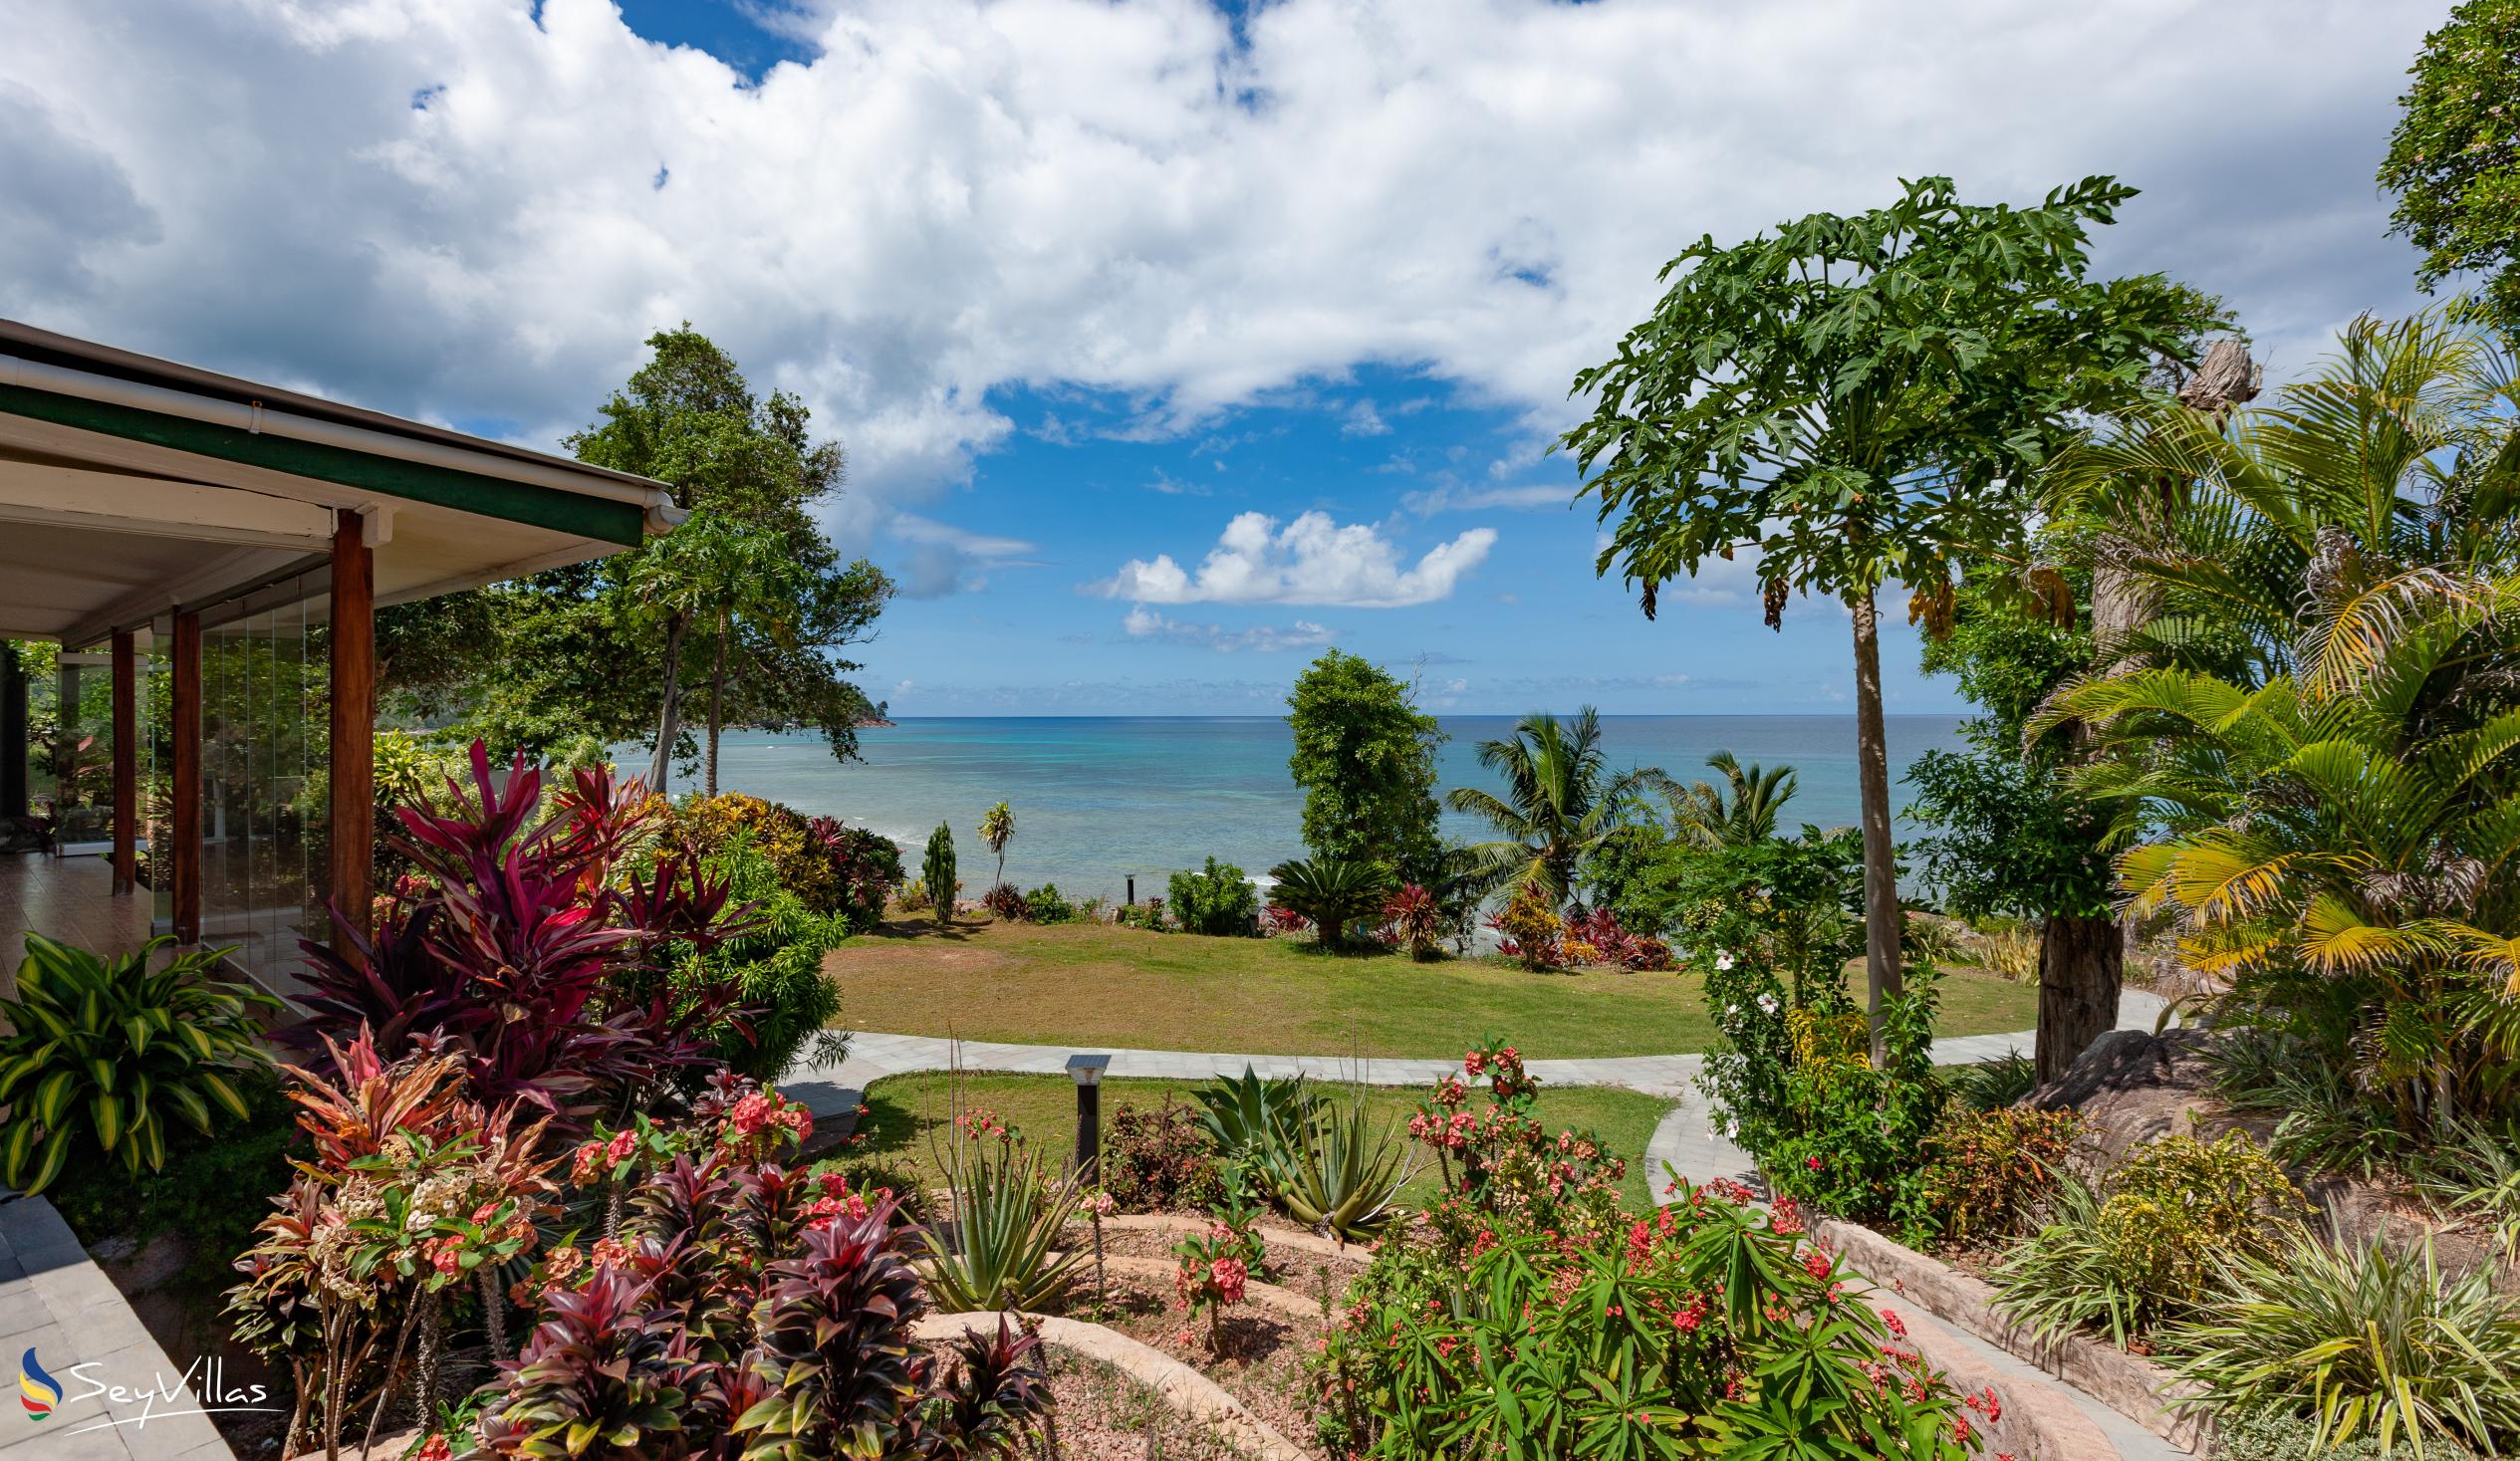 Photo 2: Cote Mer Villa - Outdoor area - Praslin (Seychelles)